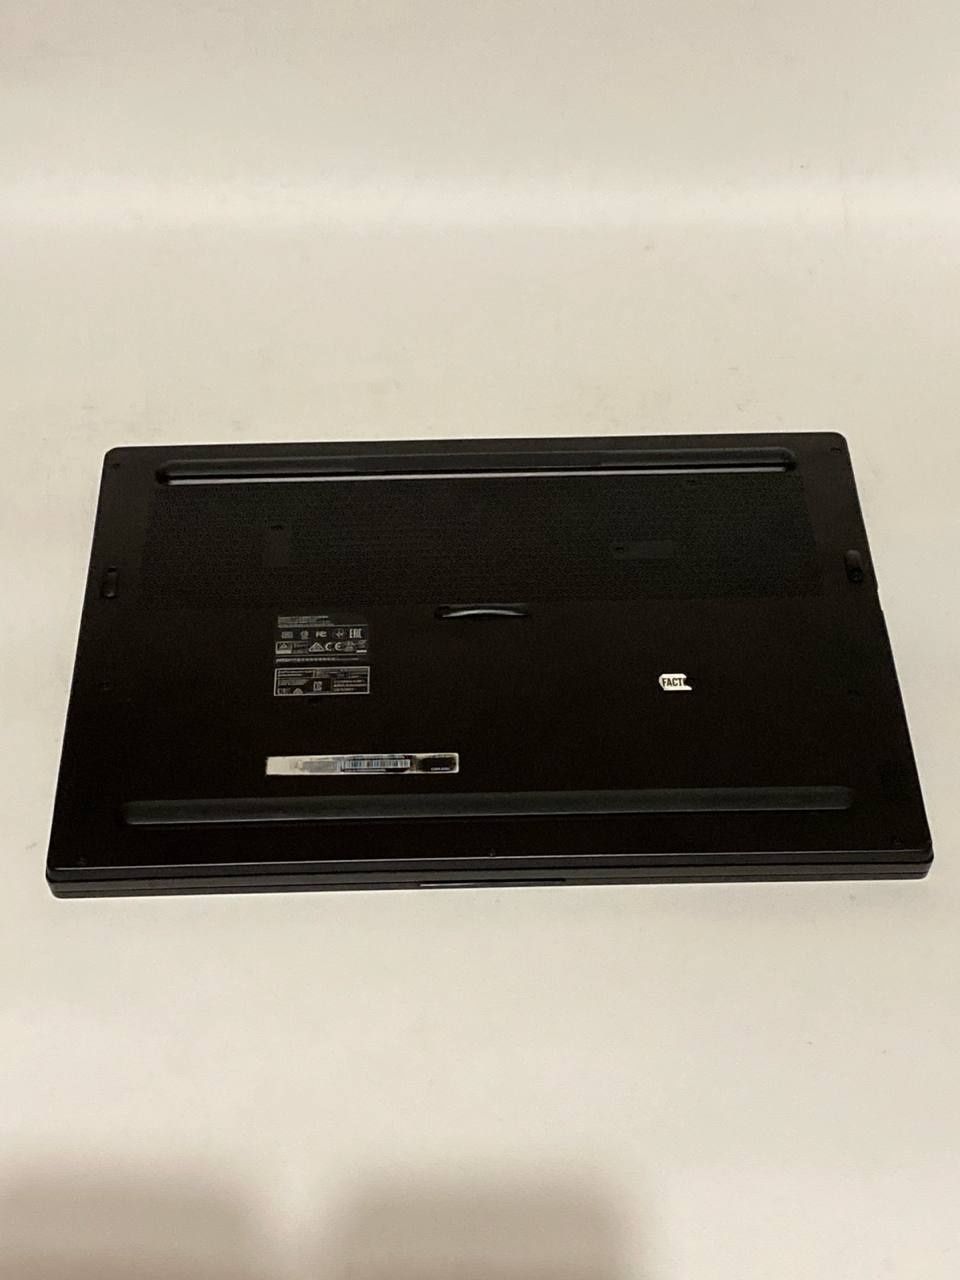 MSI 240гц Игровой Ноутбук i7 12 ядер | RTX 2060 6GB | 16GB DDR4 SSD